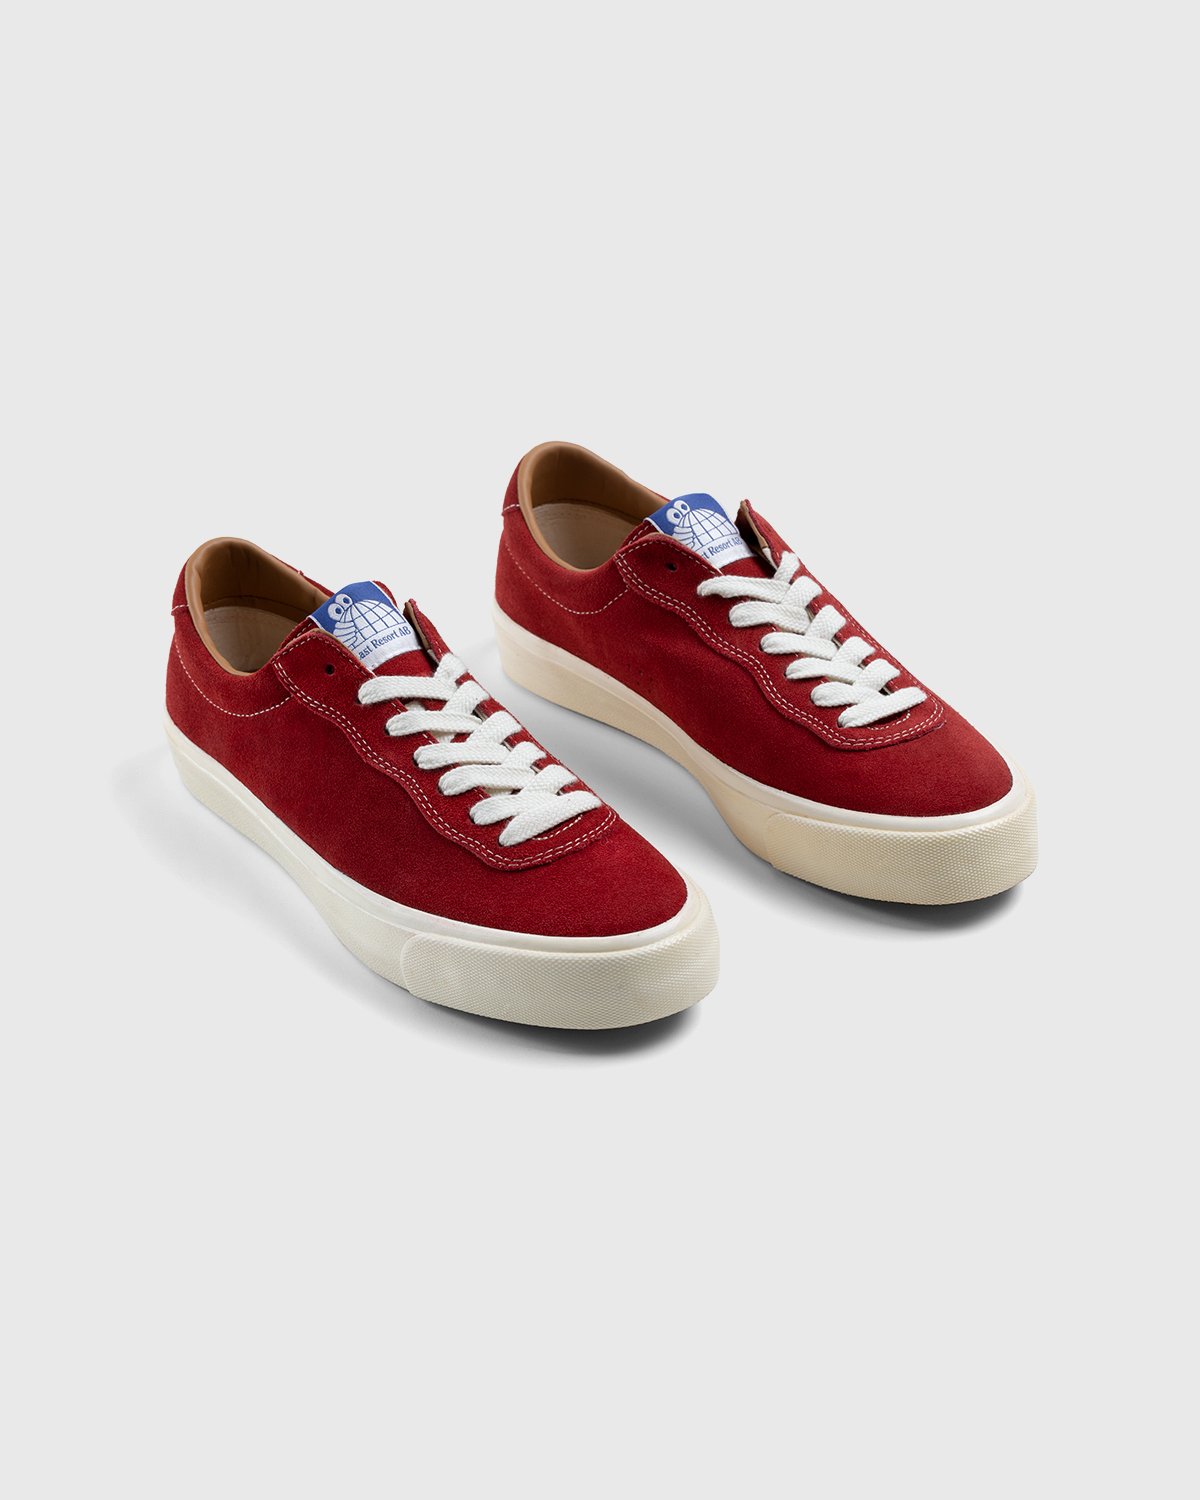 Last Resort AB - VM001 Lo Suede Old Red/White - Footwear - Red - Image 3